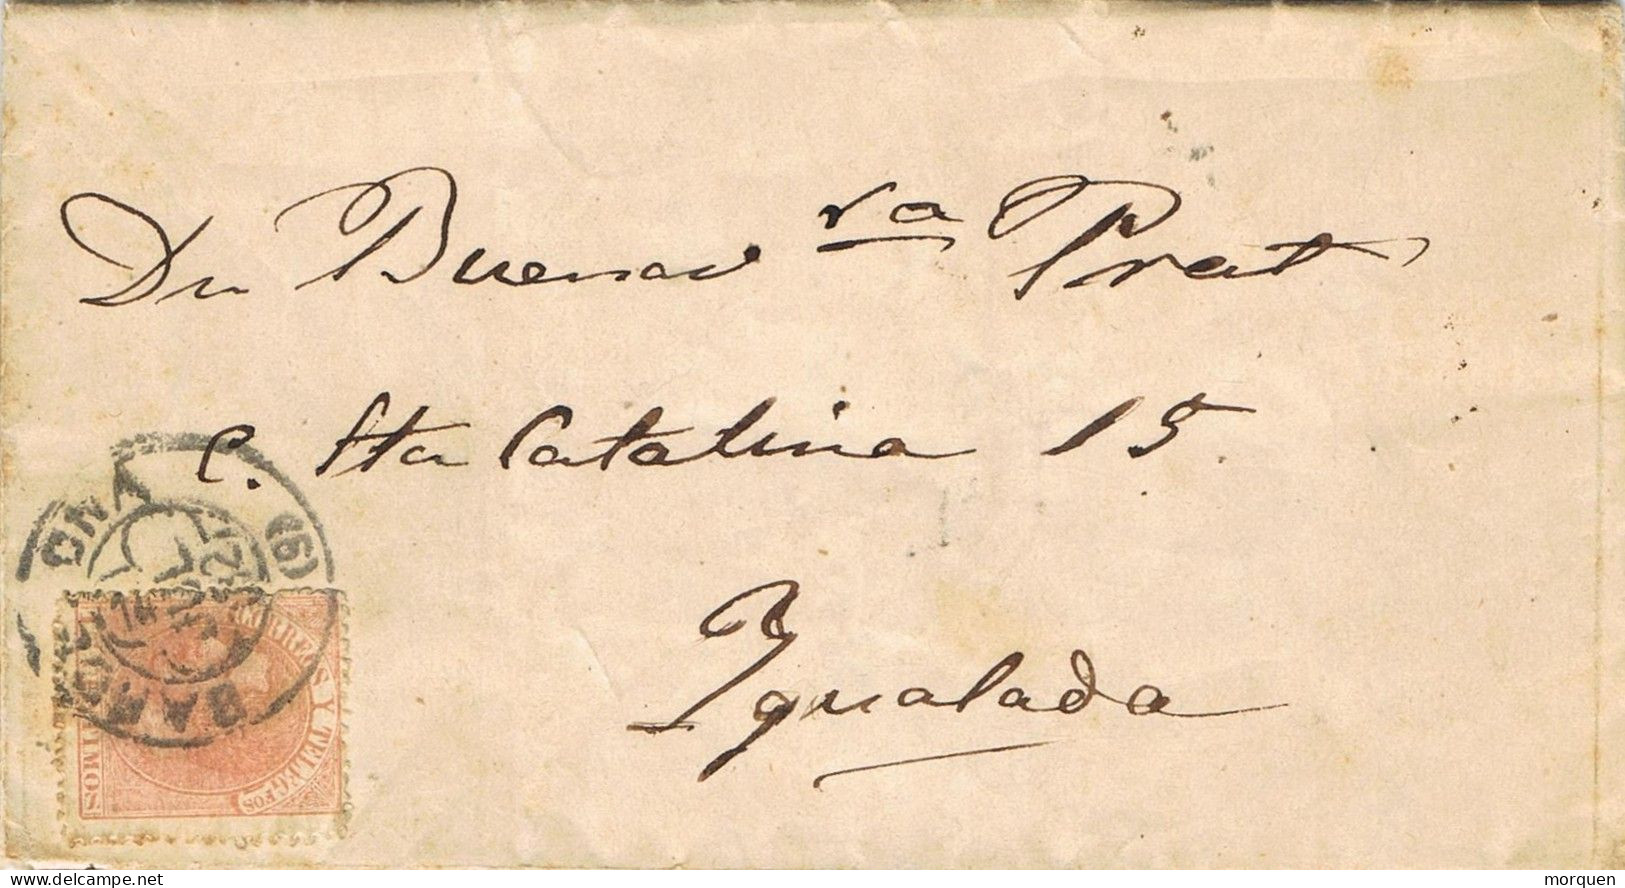 49566. Carta Entera BARCELONA 1882, Fechador Trebol, Alfonso XII, Circulada A Igualada - Covers & Documents